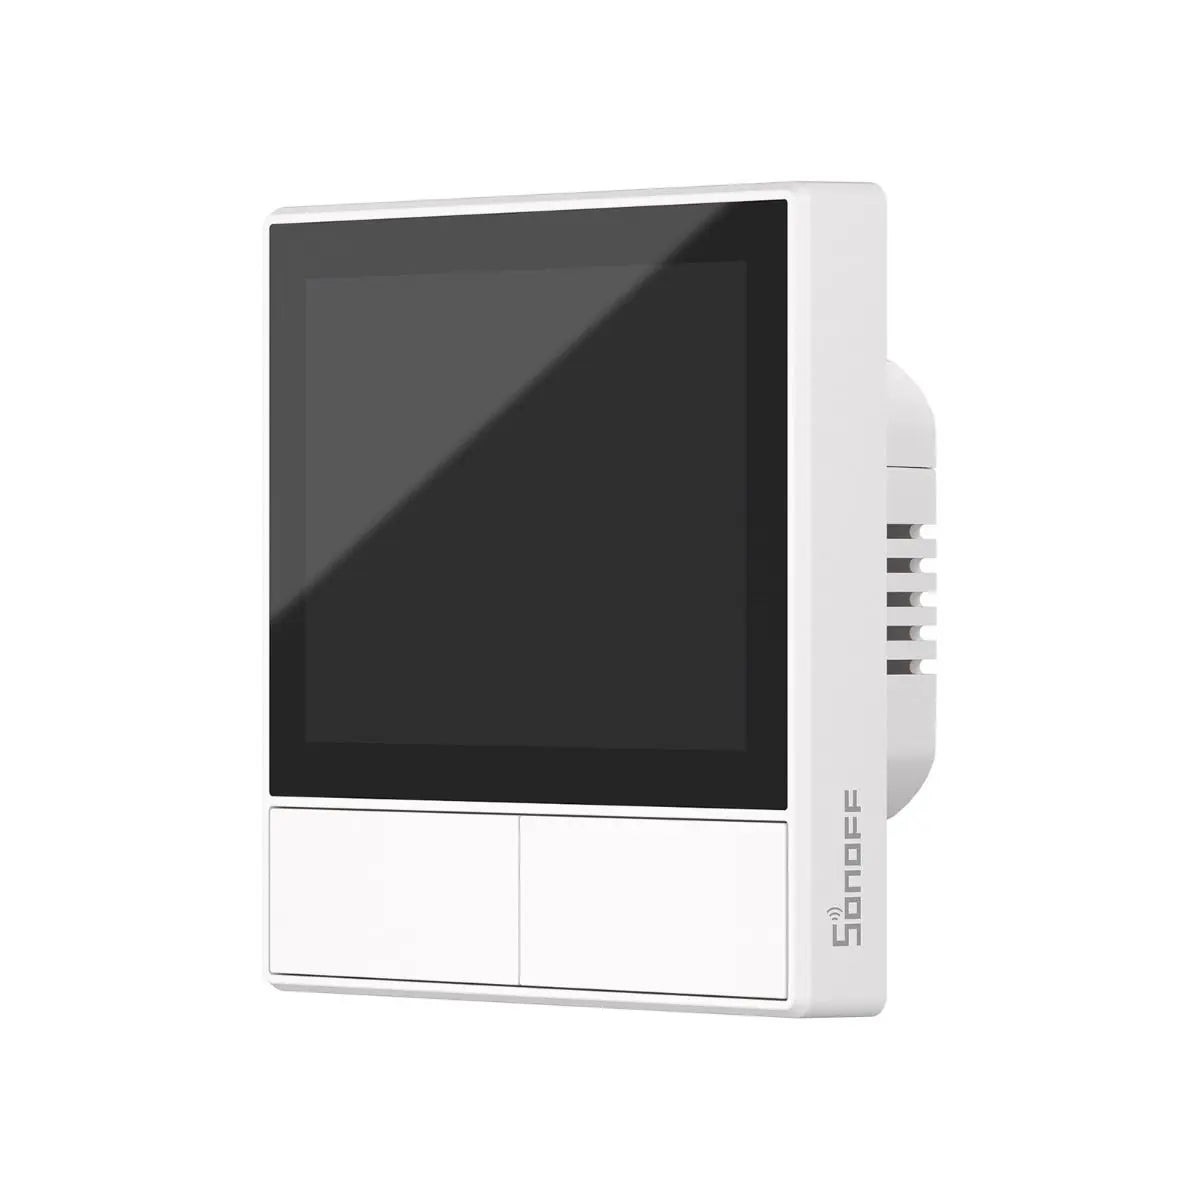 Sonoff NSPanel Ecrã Multifunções Inteligente wifi branco: Ajusta a temperatura com facilidade